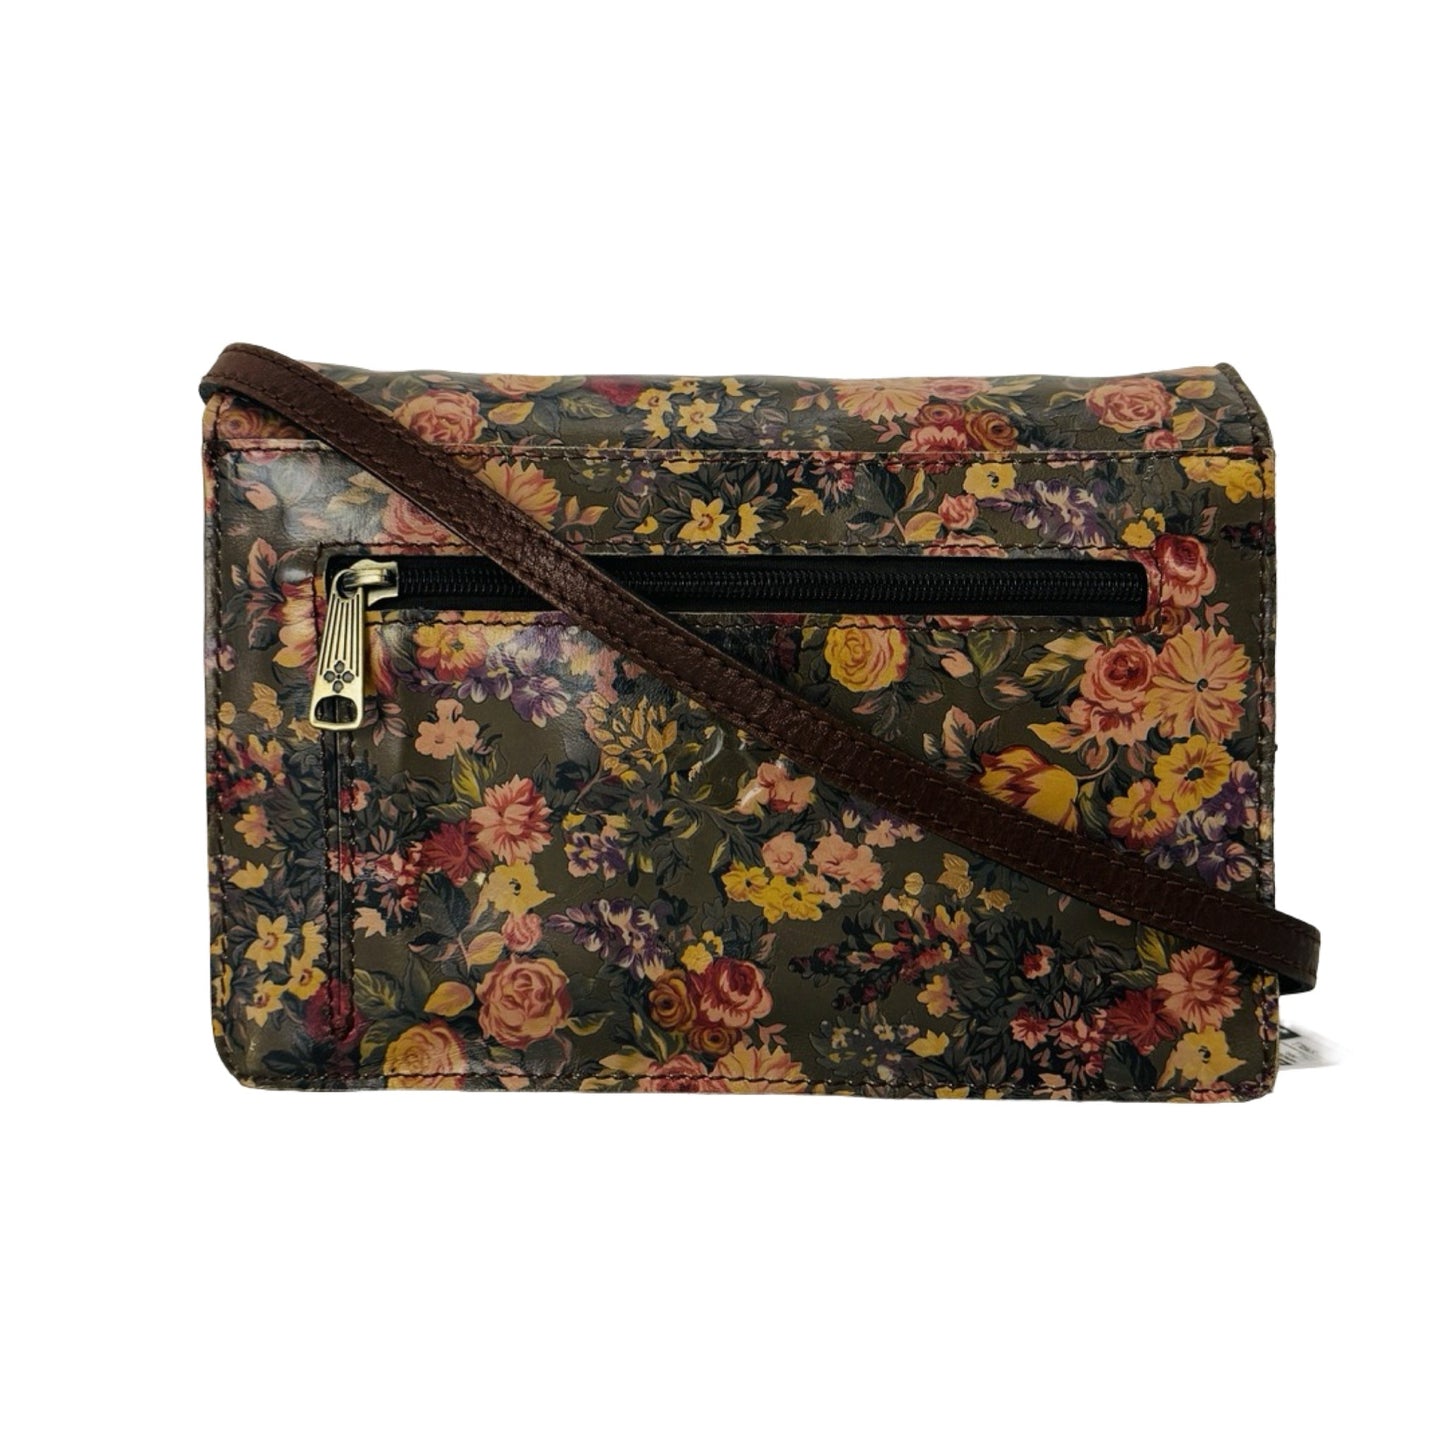 Vintage English Country Garden Cascina Leather Floral Adjustable Strap Crossbody Handbag Designer By Patricia Nash  Size: Small